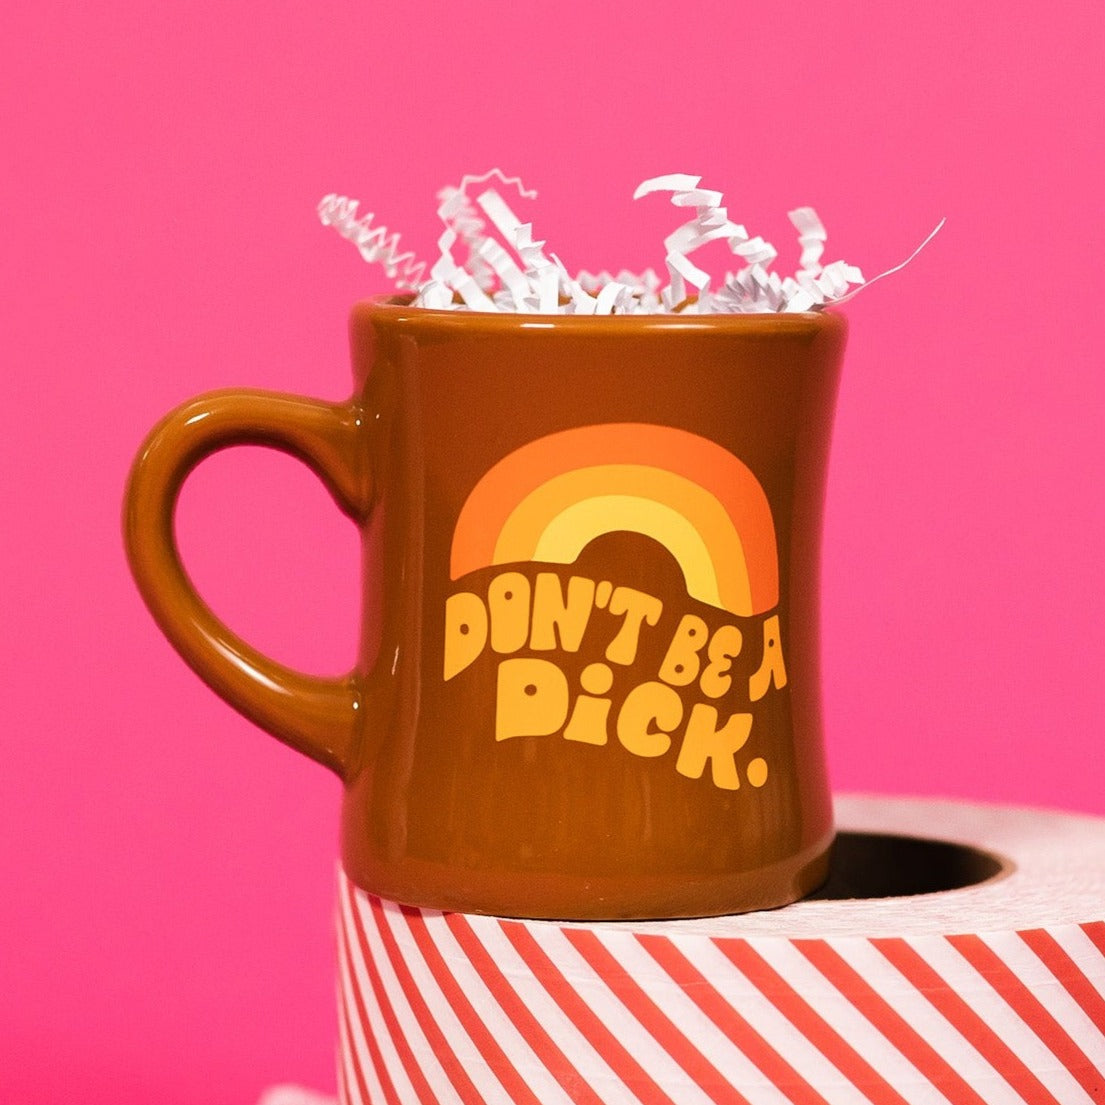 Don't Be A Dick Diner Mug